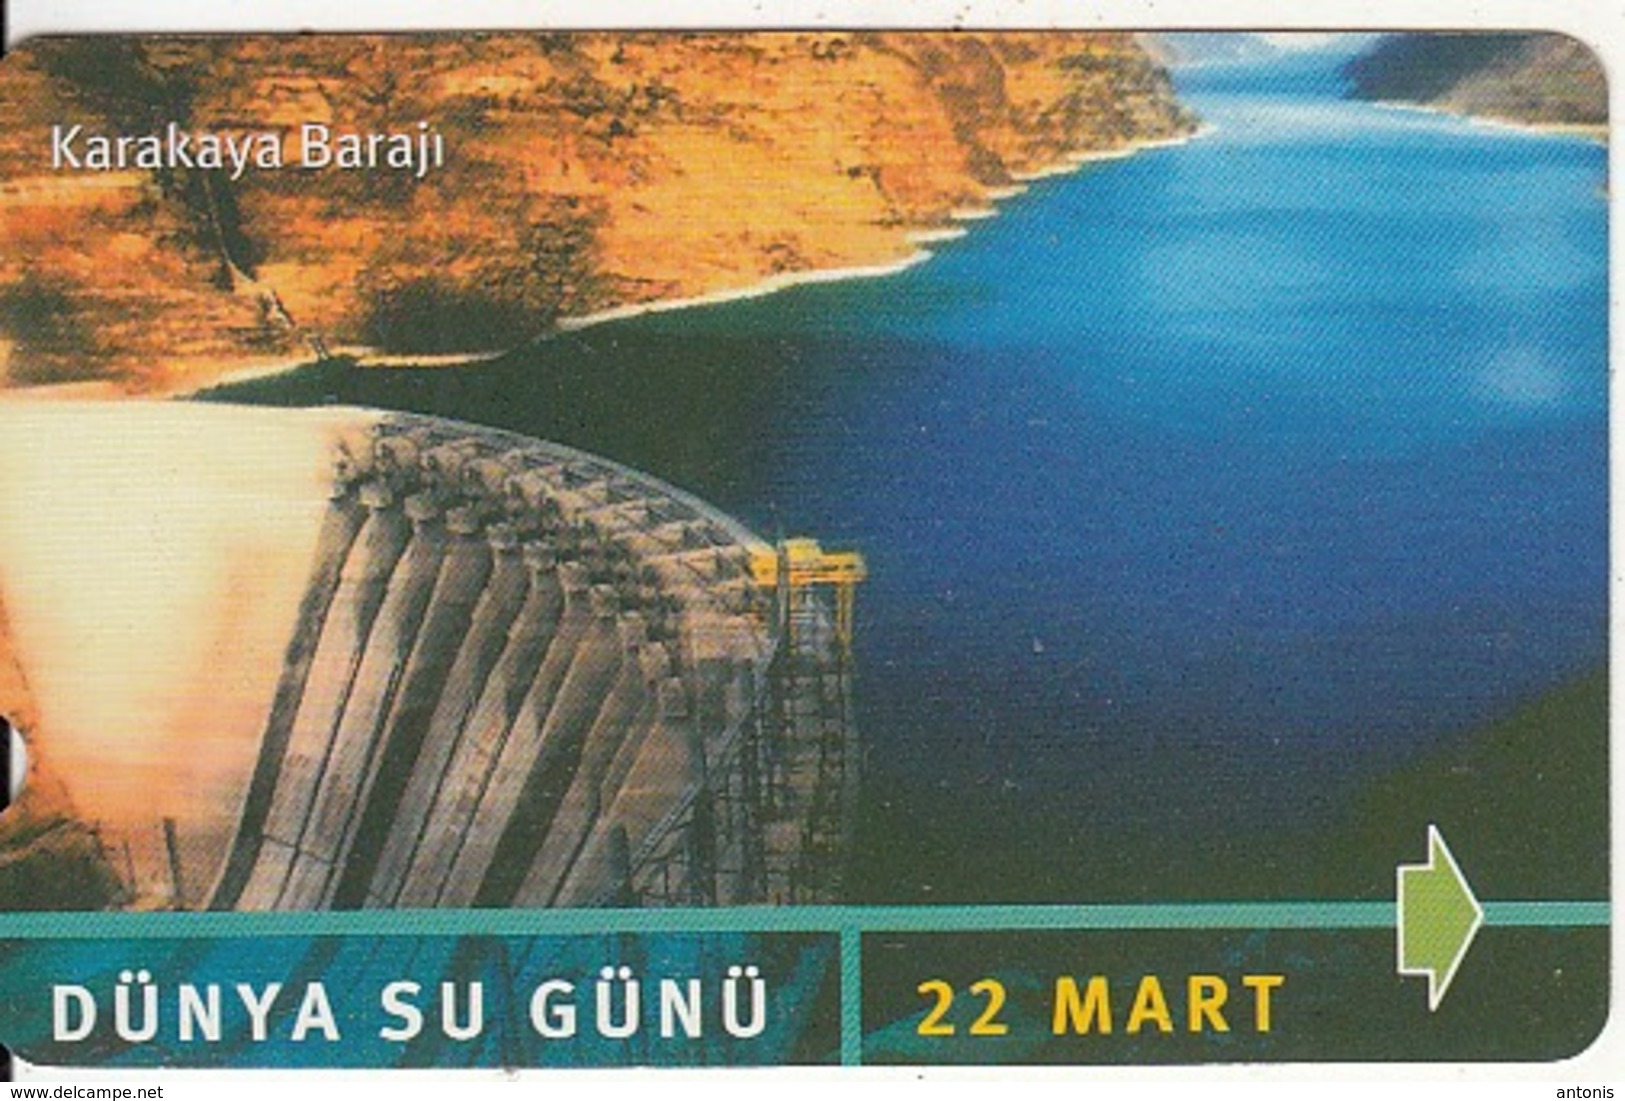 TURKEY - Dunya Su Gunu, Karakaya Baraji(30 Units), 03/02, Used - Turkey